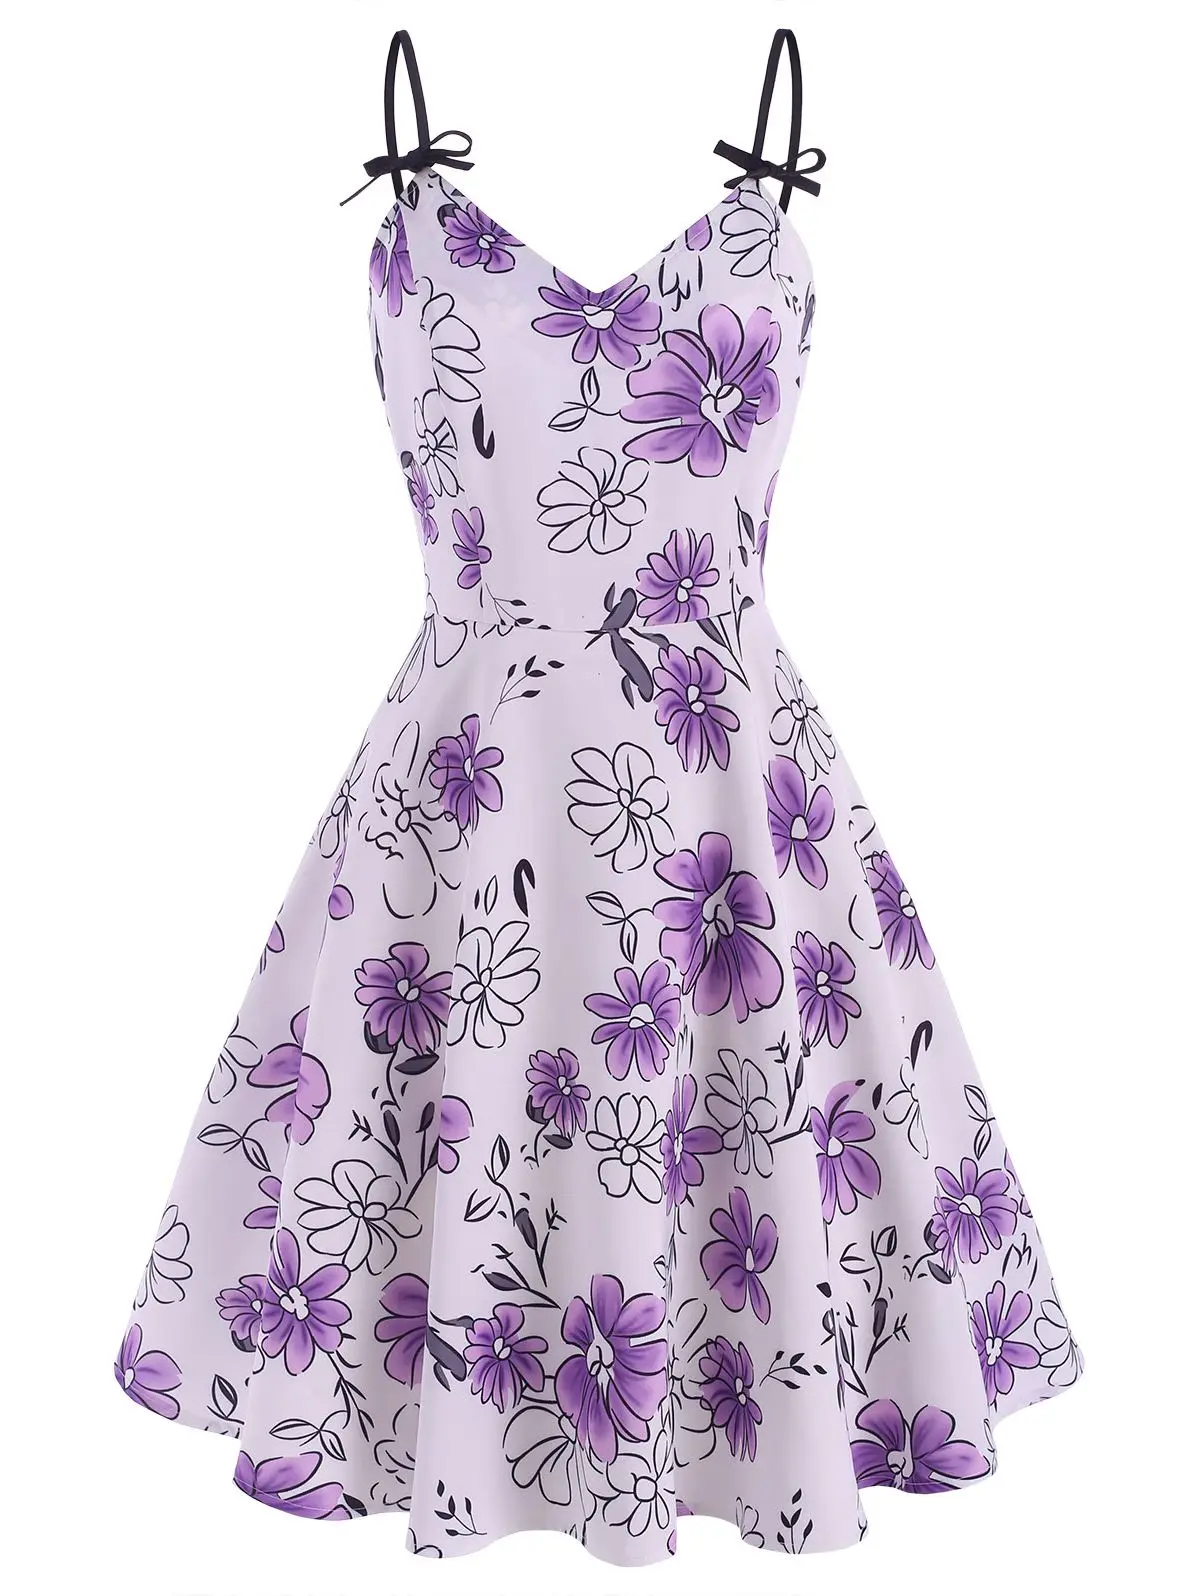 

Dressfo Knee-Length Floral Dress Bowknot Flower Planet Women Cami Sundress Summer Spaghetti Strap Sleeveless Flare Dress